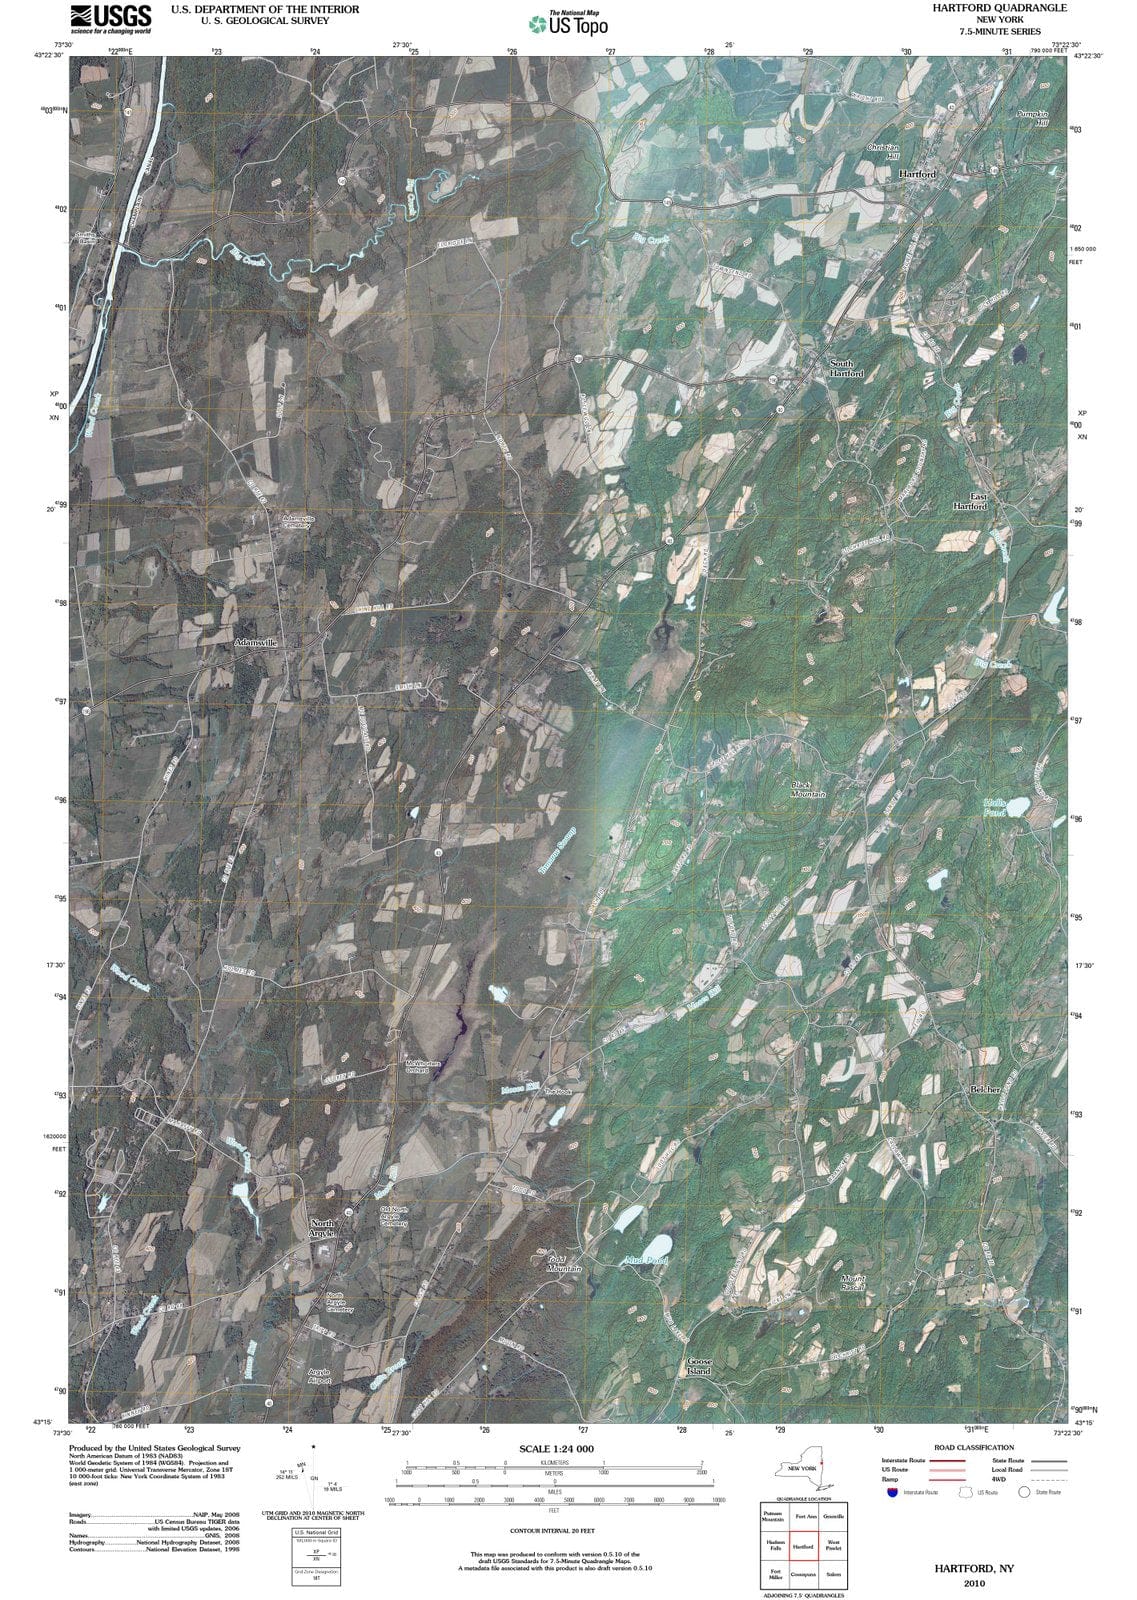 2010 Hartford, NY - New York - USGS Topographic Map